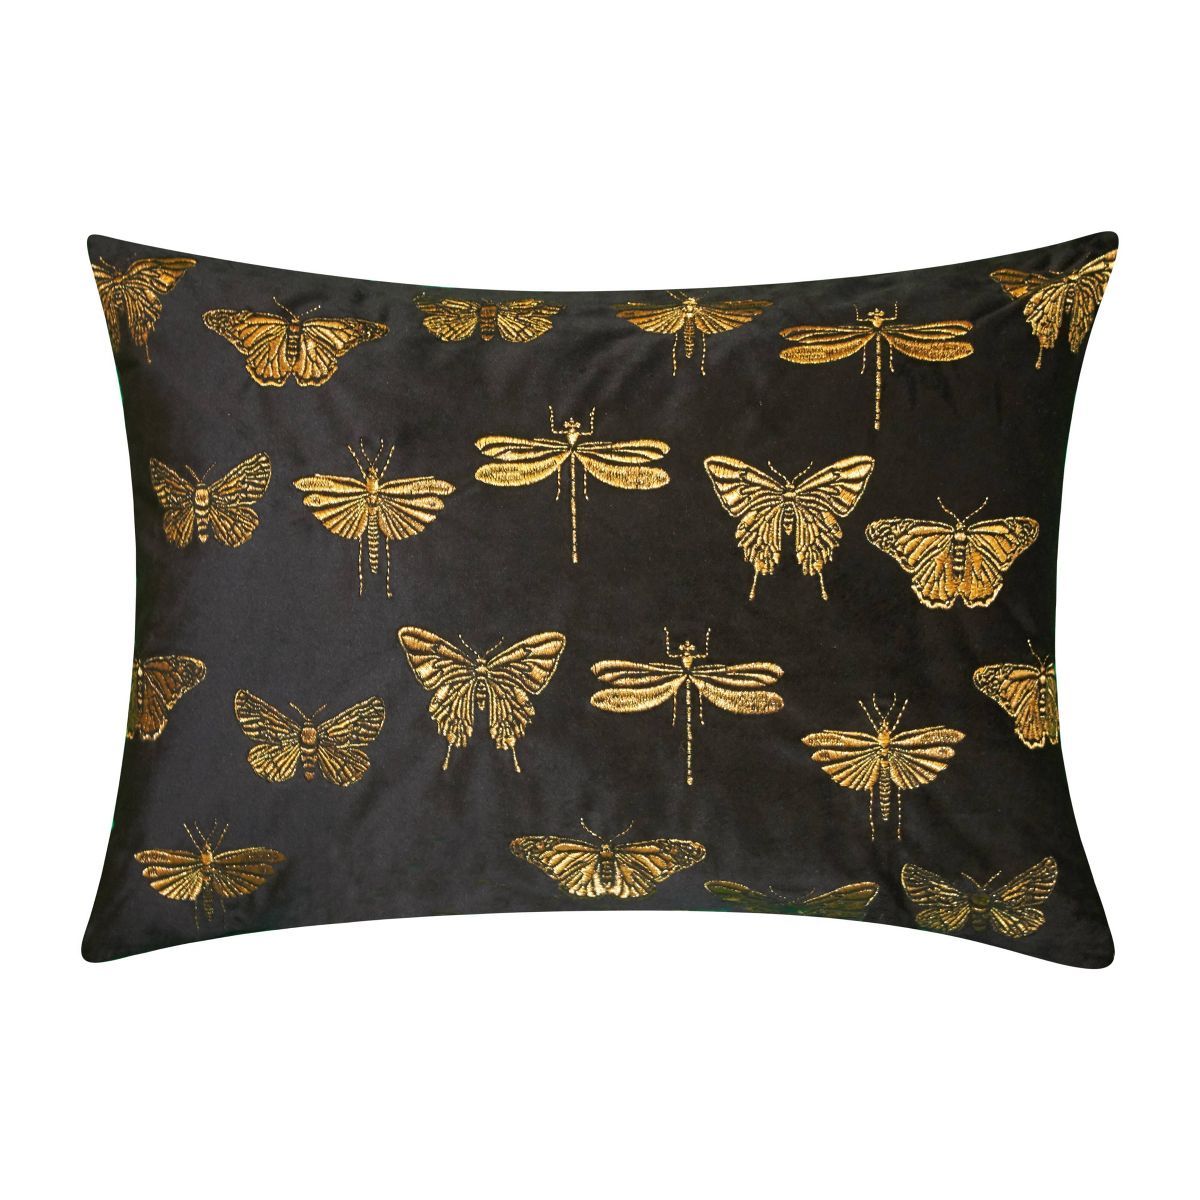 13"x20" Oversize Embroidered Butterflies and Moths Lumbar Throw Pillow - Edie@Home | Target